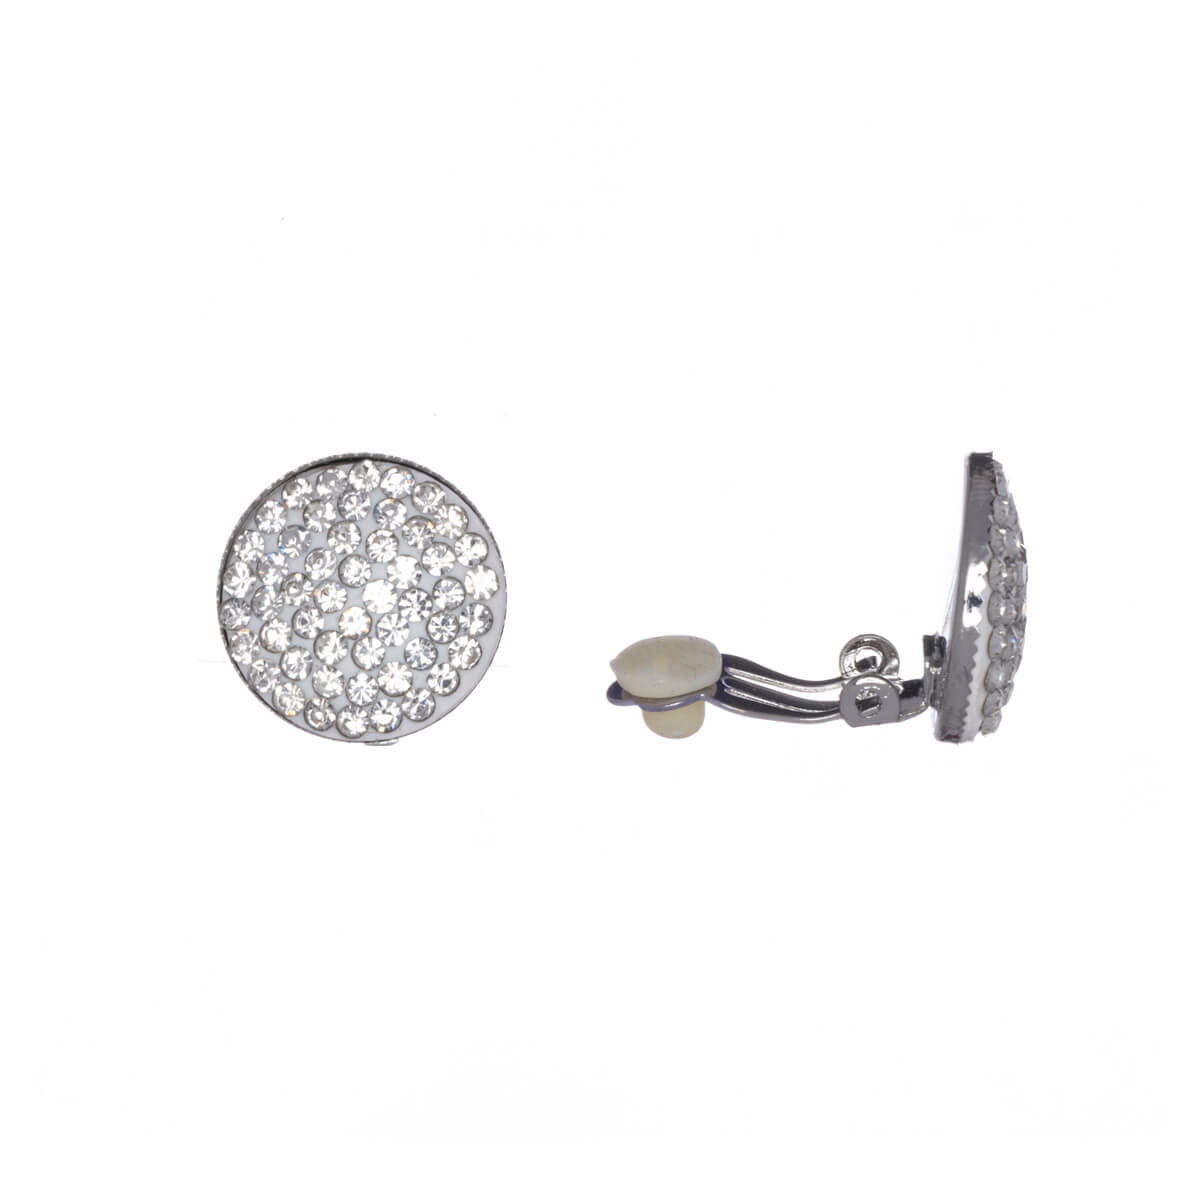 Round rhinestone rhinestone clip earrings with glass stones